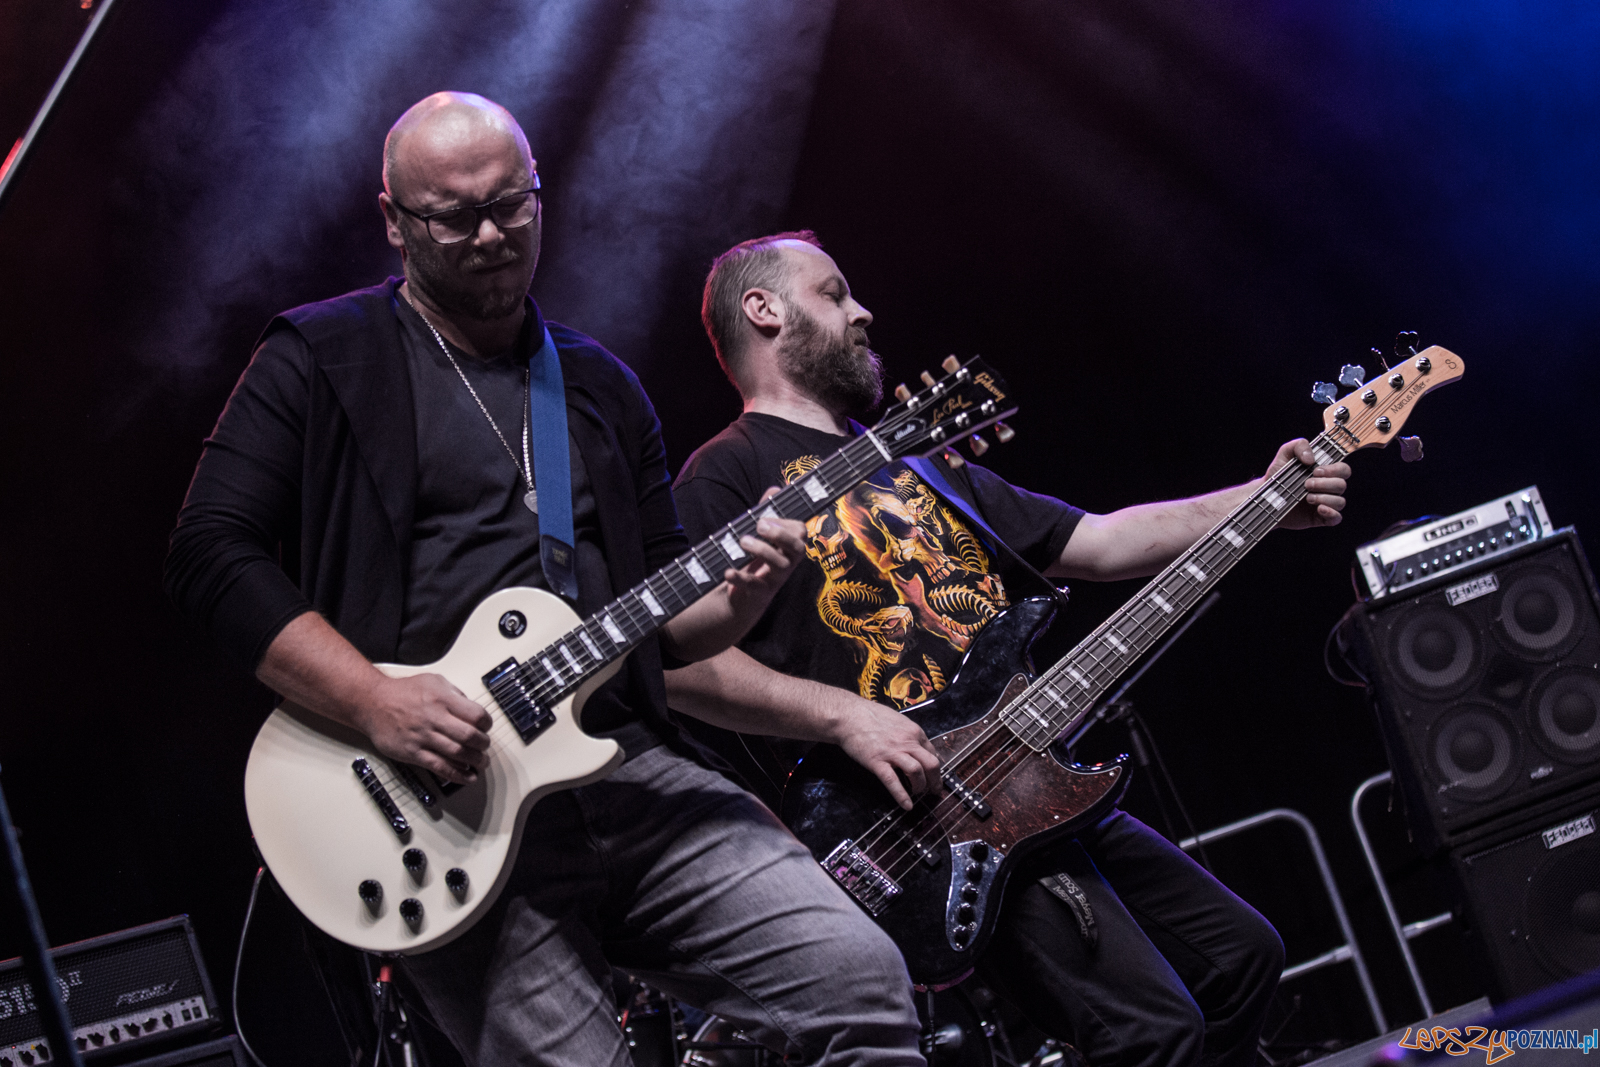 Lalamido - rock festiwal (24.10.2017) hala Arena  Foto: © lepszyPOZNAN.pl / Karolina Kiraga